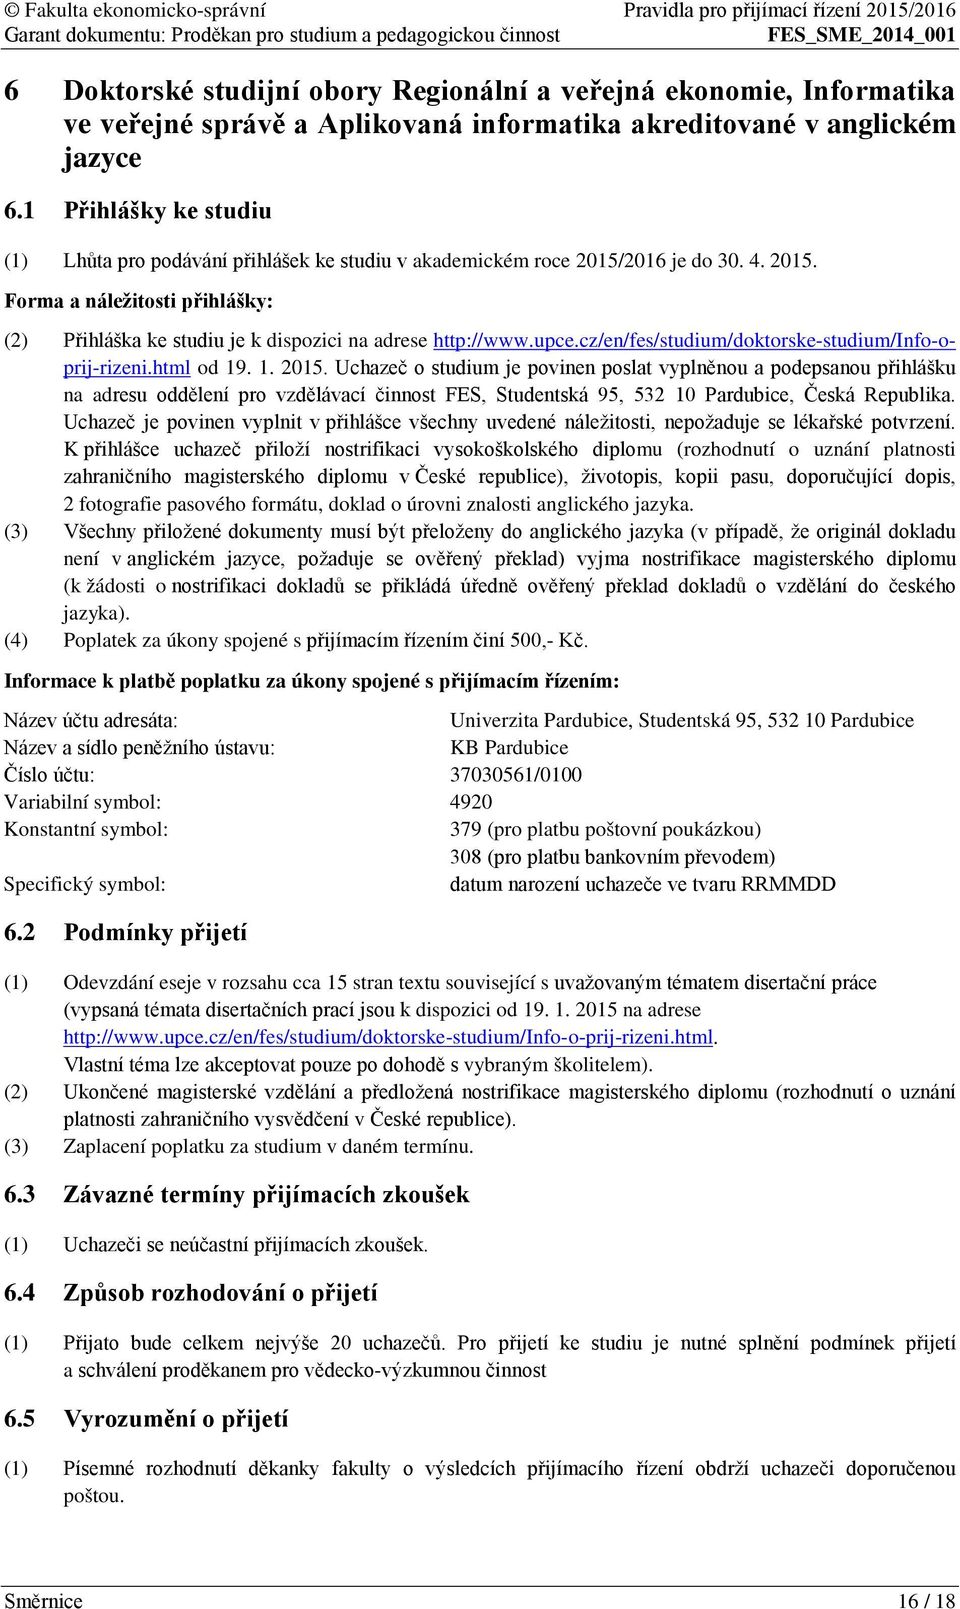 upce.cz/en/fes/studium/doktorske-studium/info-oprij-rizeni.html od 19. 1. 2015.